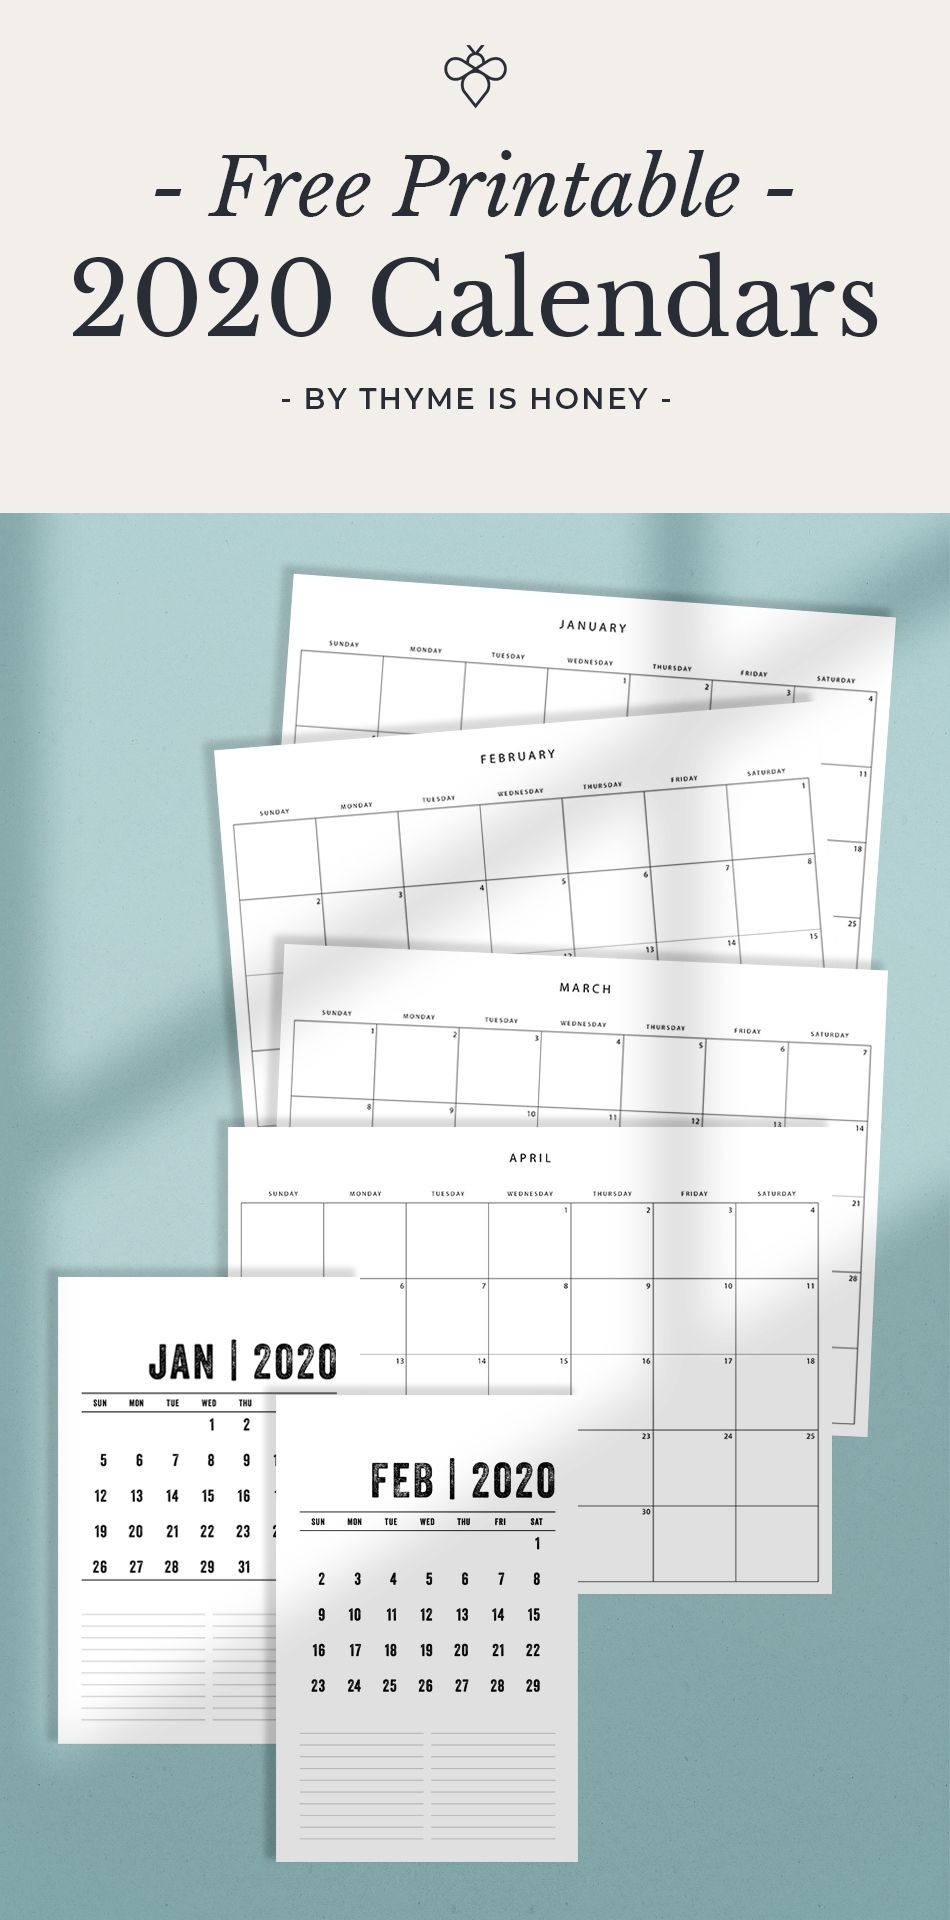 Free 2020 Calendars - Thyme Is Honey